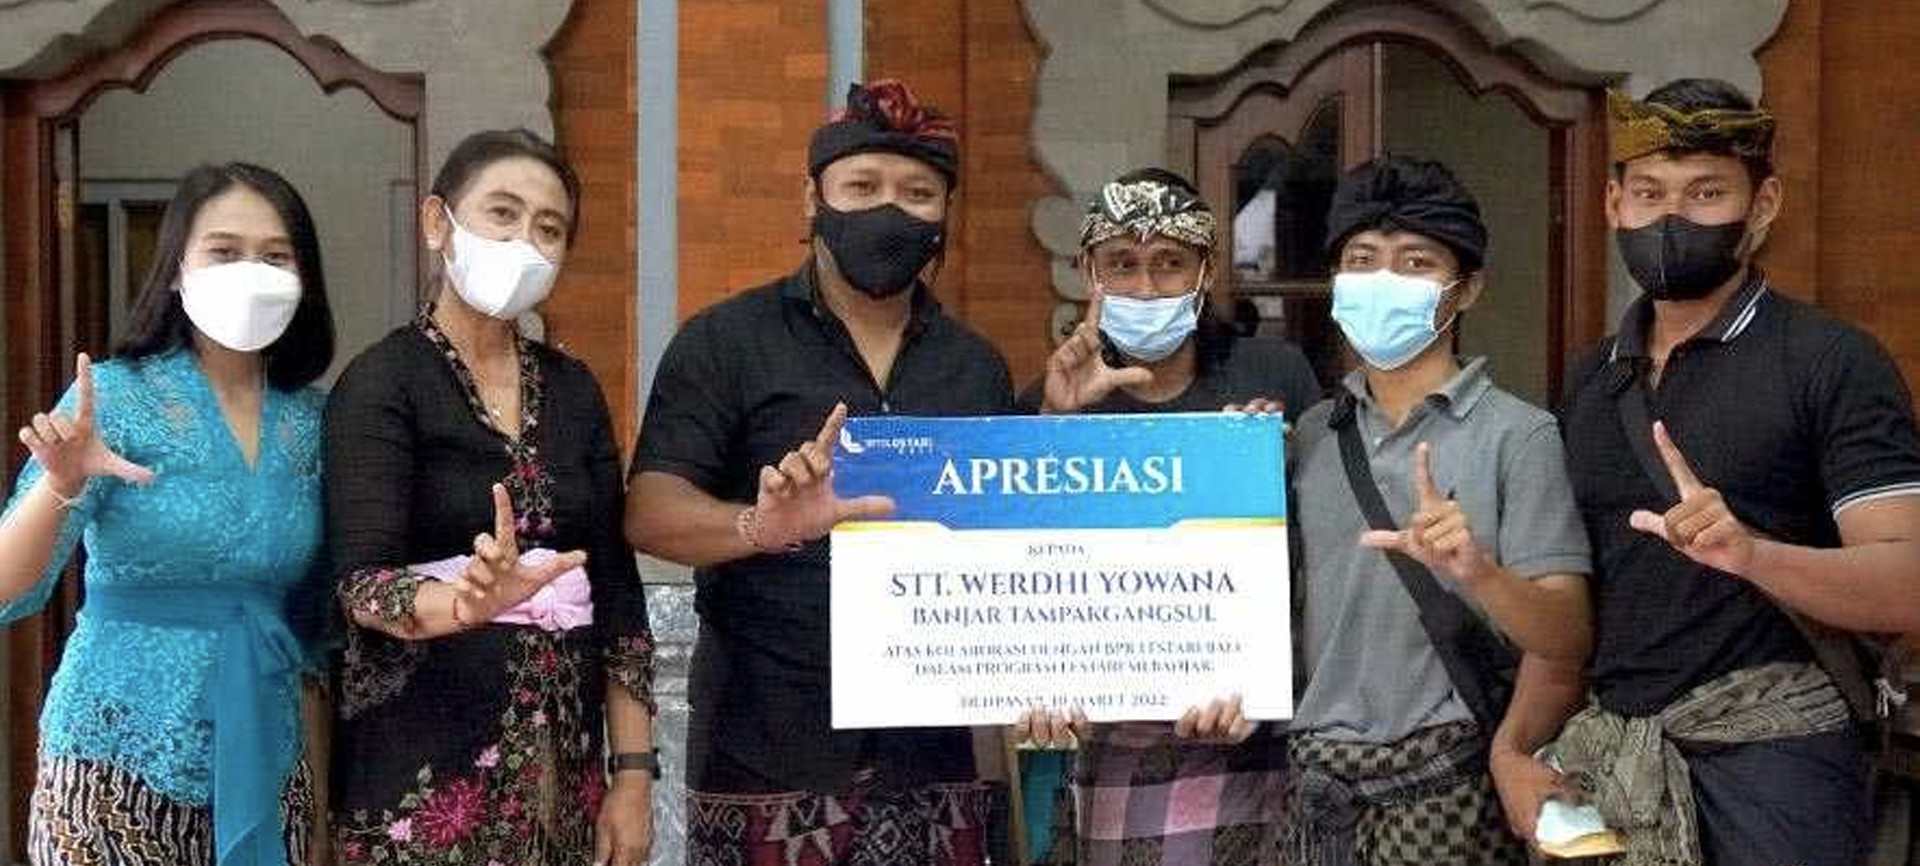 Push Bali Steady, BPR Lestari Collaborated with ST Werdhi Yowana through Lestari Mebanjar